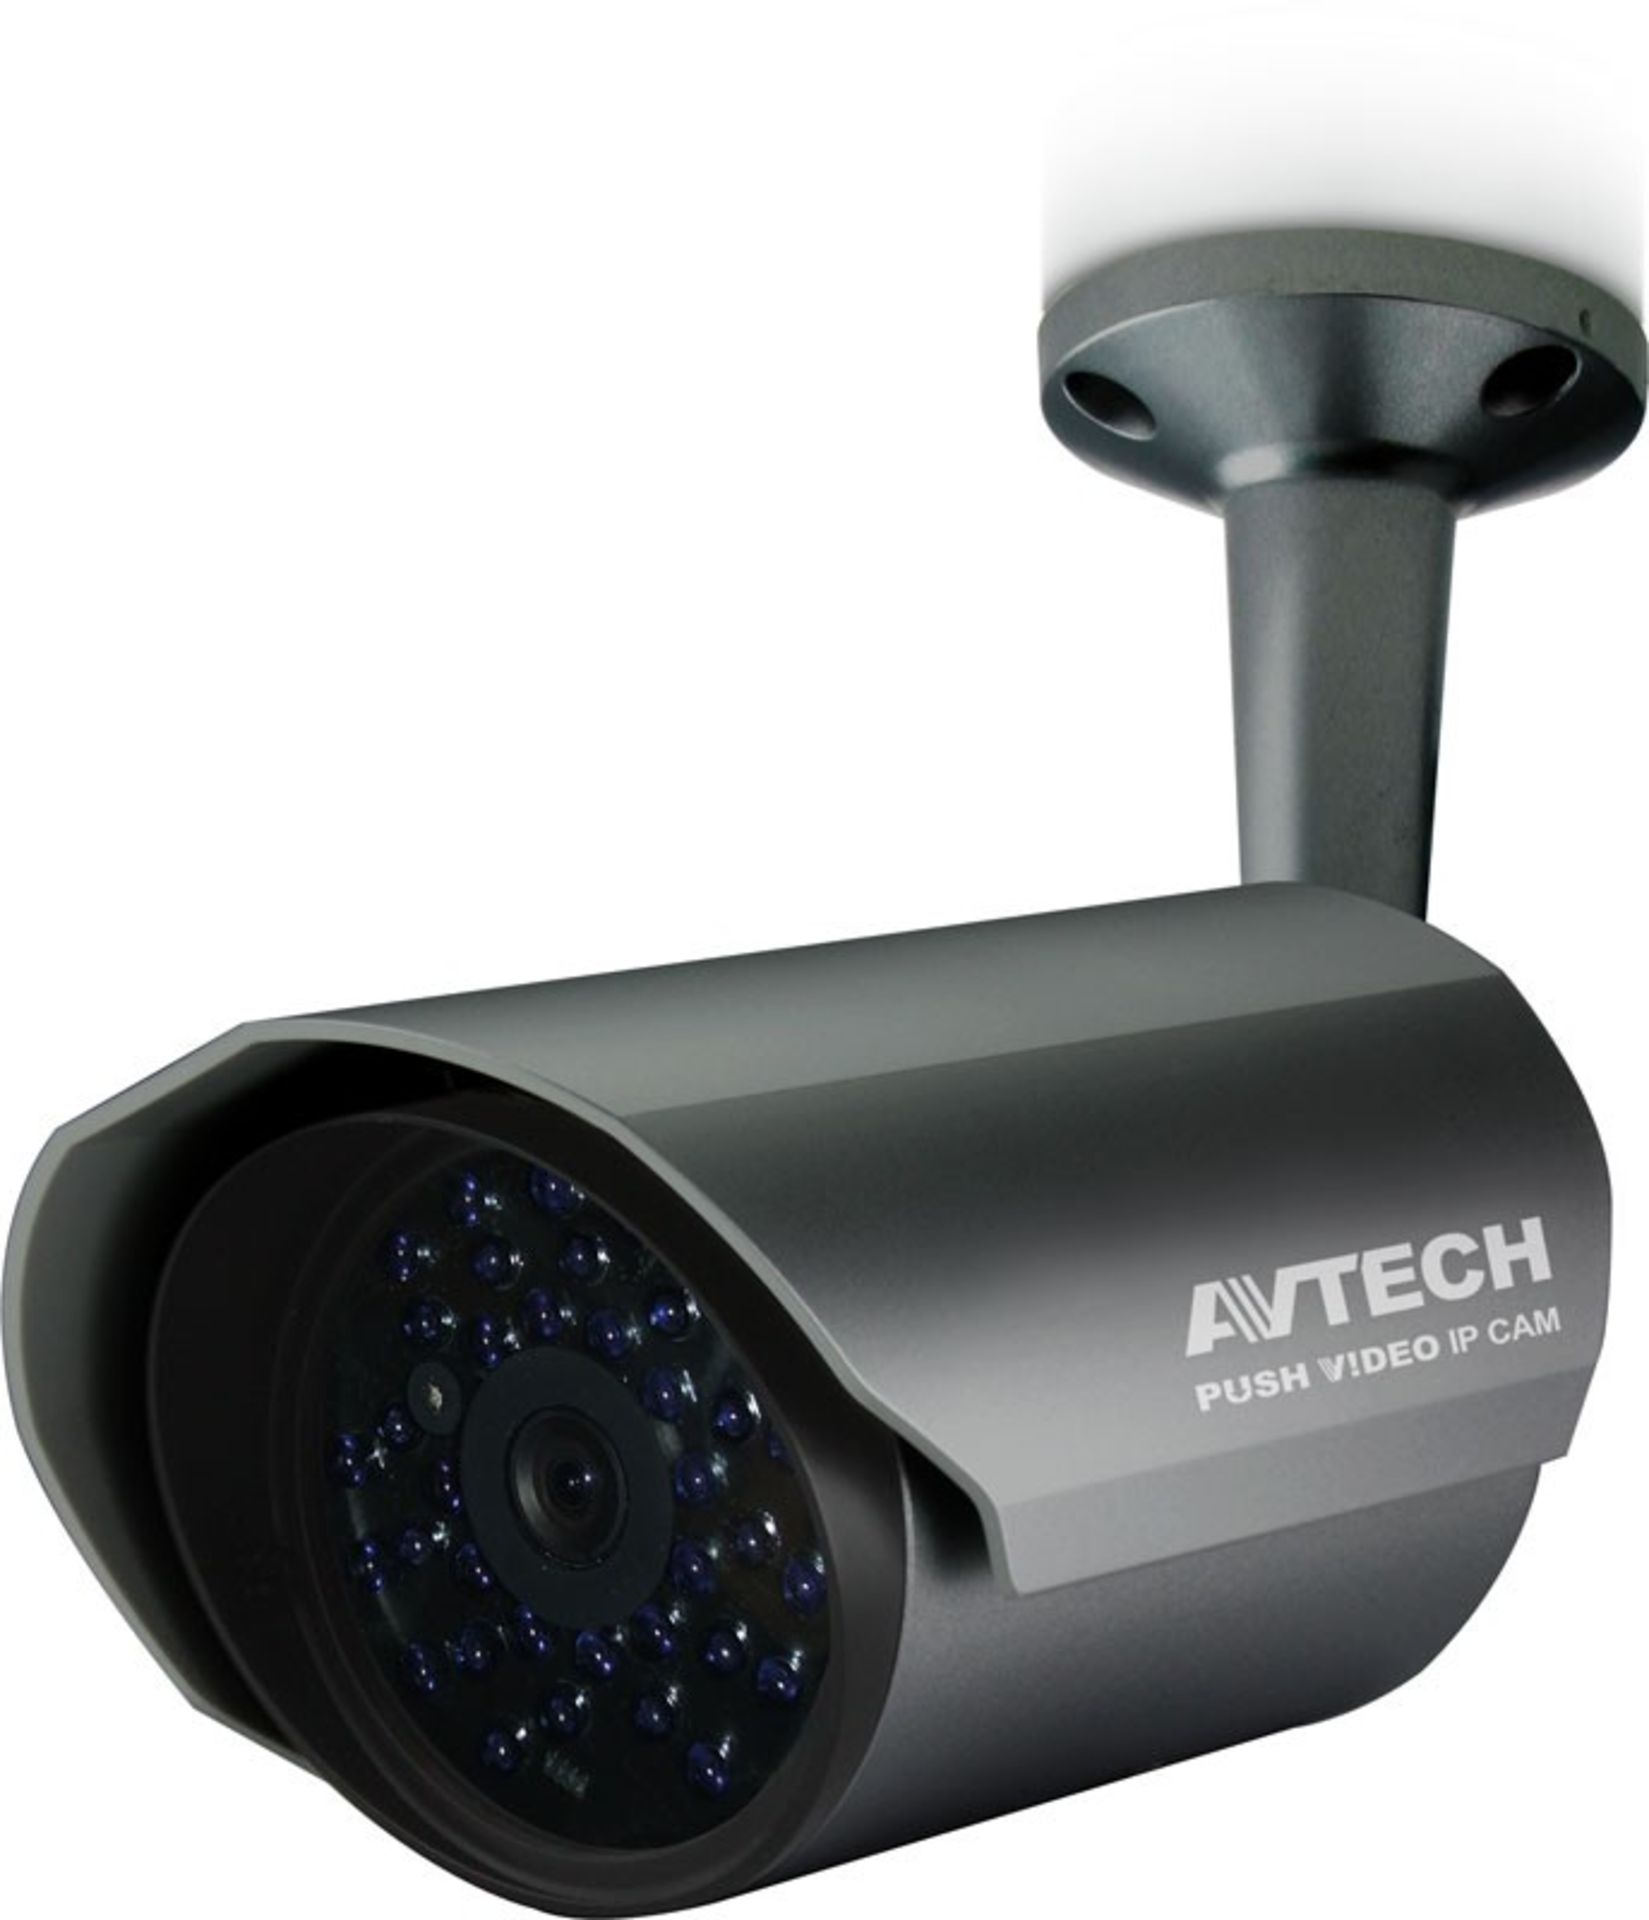 V Brand New Avtech VGA IR Bullet IP Camera, 20m range, IP67 X 2 YOUR BID PRICE TO BE MULTIPLIED BY